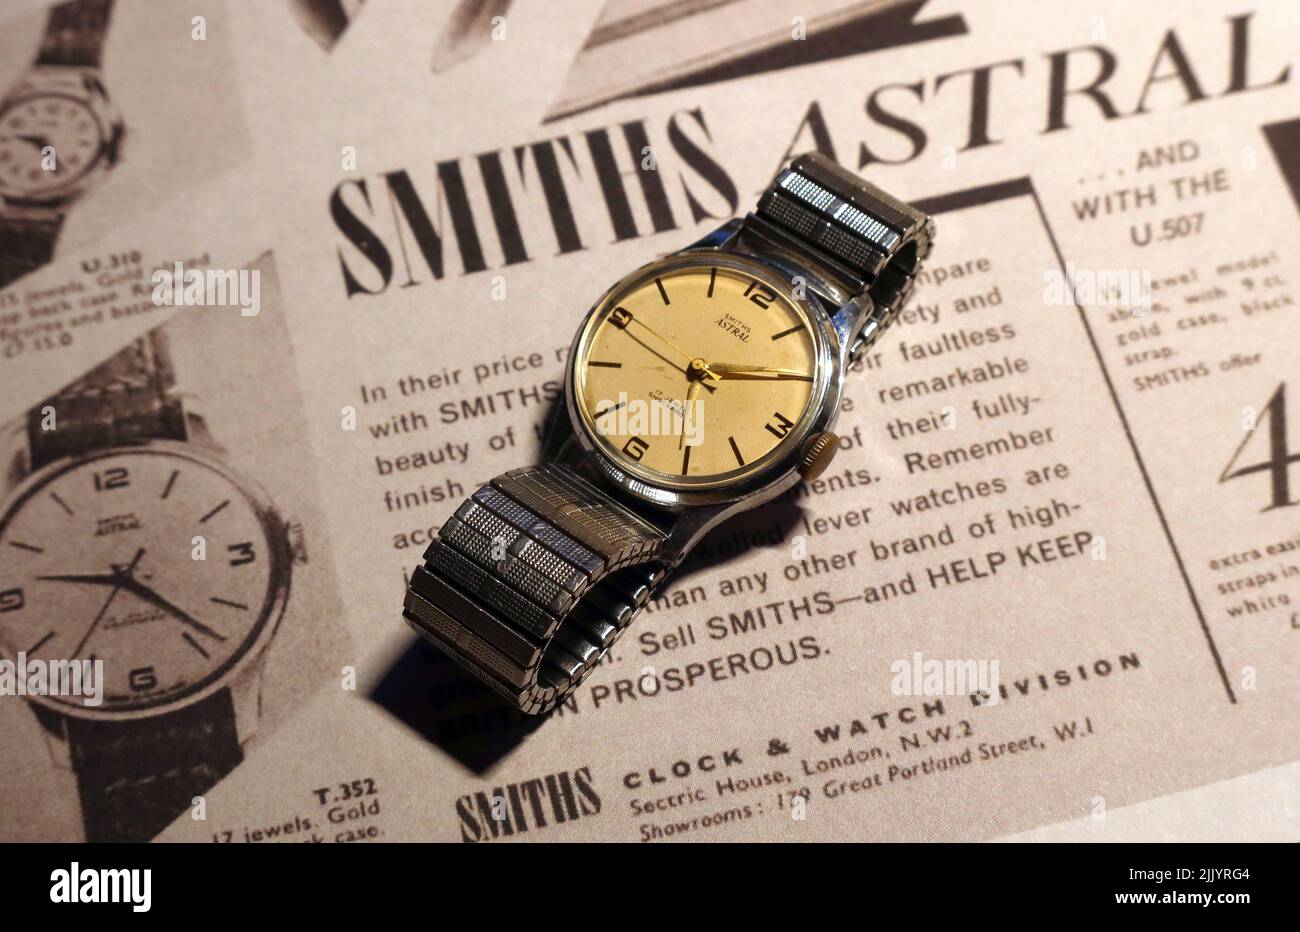 1960's Smiths Astral watch on an original Smiths Watches Cheltenham advert Stock Photo